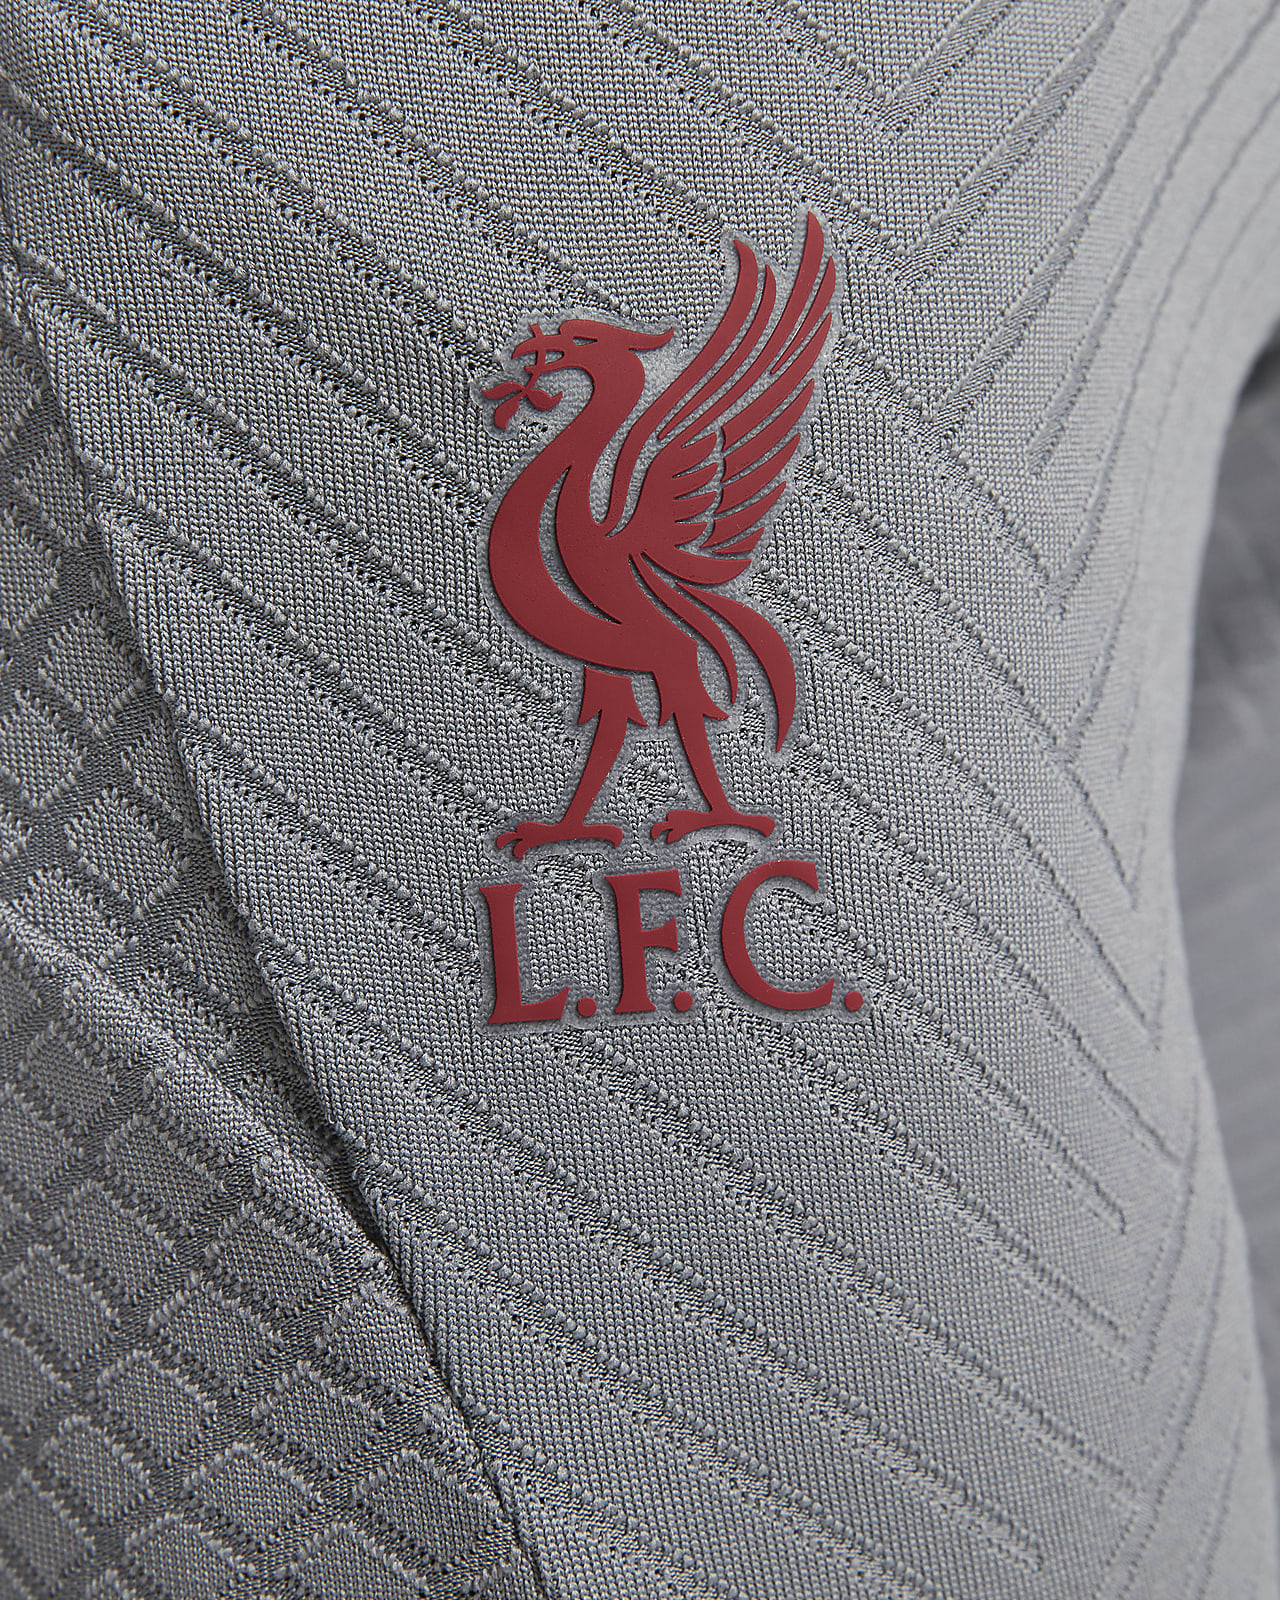 Liverpool F.C. Strike Elite Men's Nike Dri-FIT ADV Knit Football Pants ...